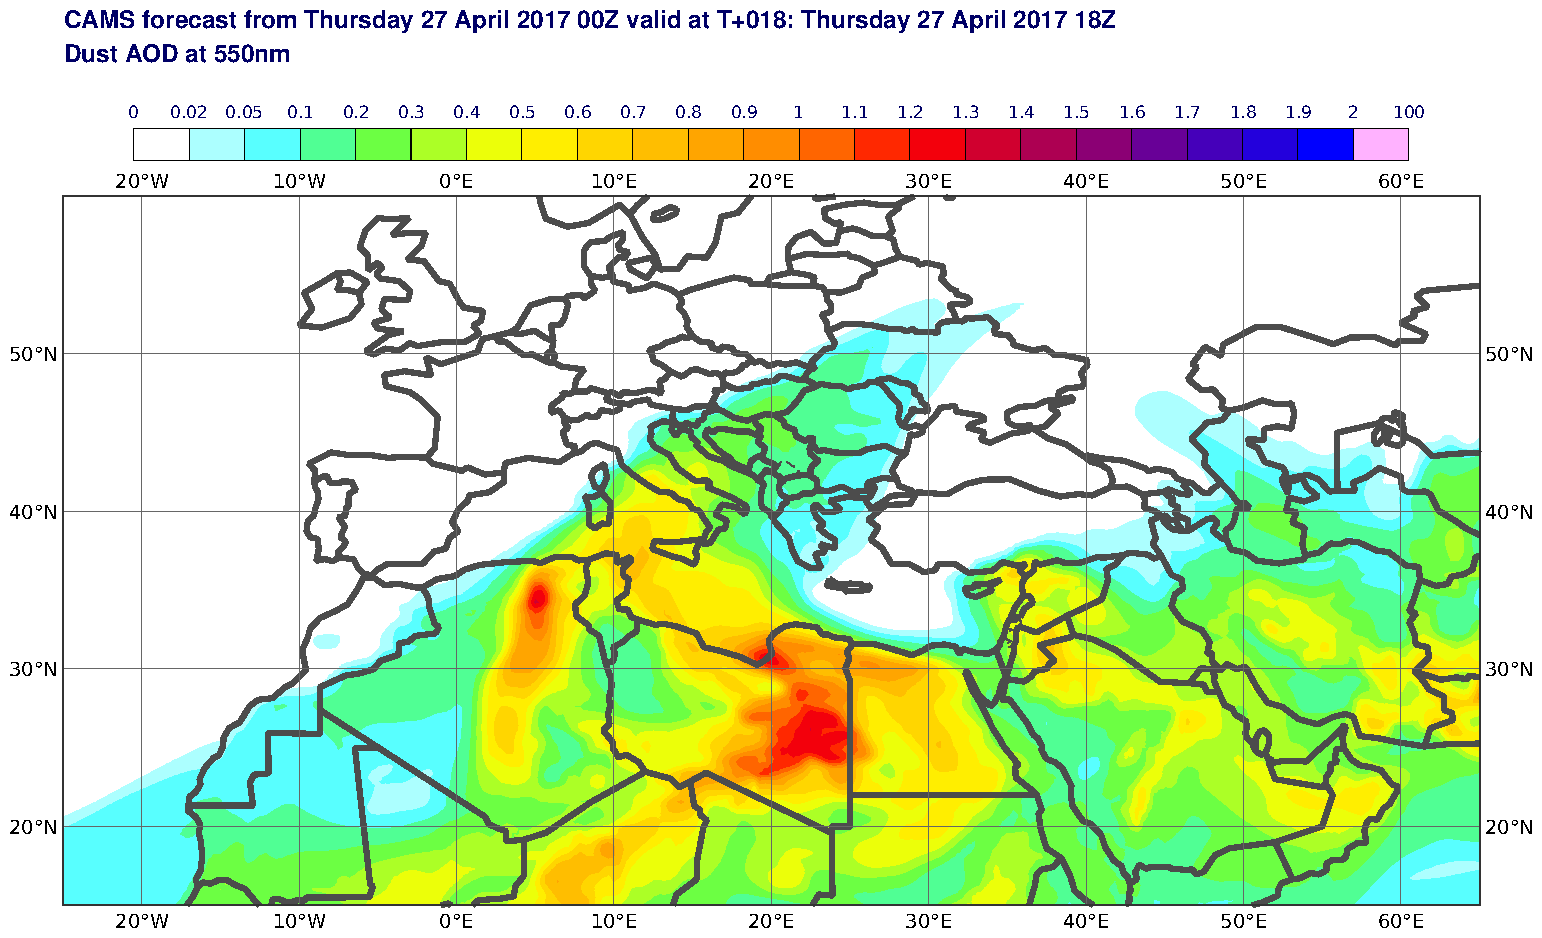 Dust AOD at 550nm valid at T18 - 2017-04-27 18:00